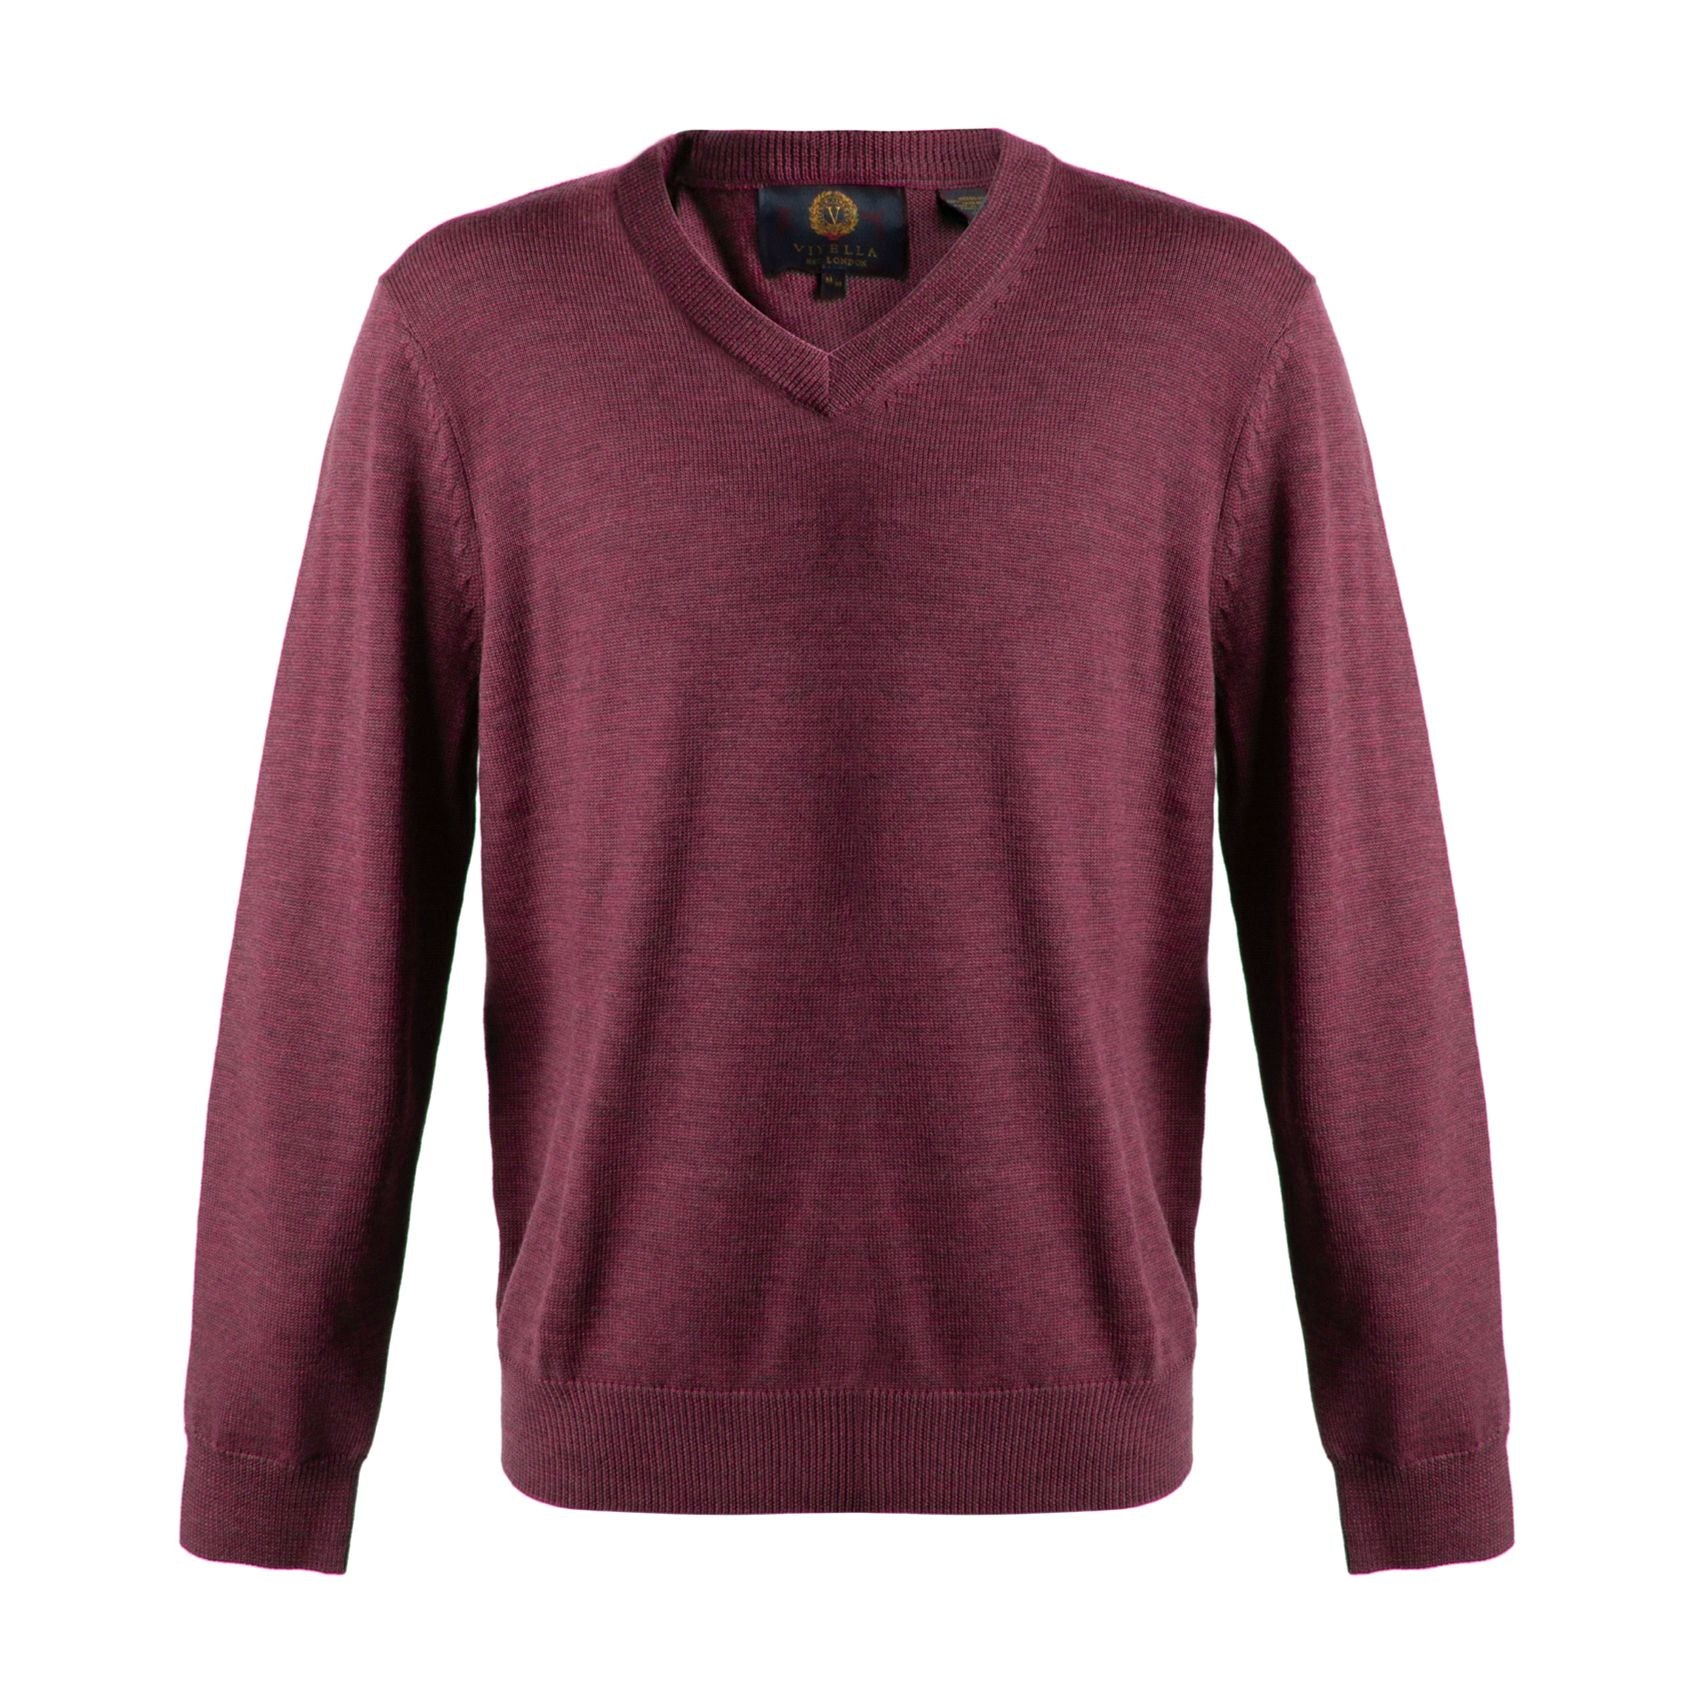 Extra Fine 'Zegna Baruffa' Merino Wool V-Neck Sweater in Ruby Wine (Size Medium) by Viyella